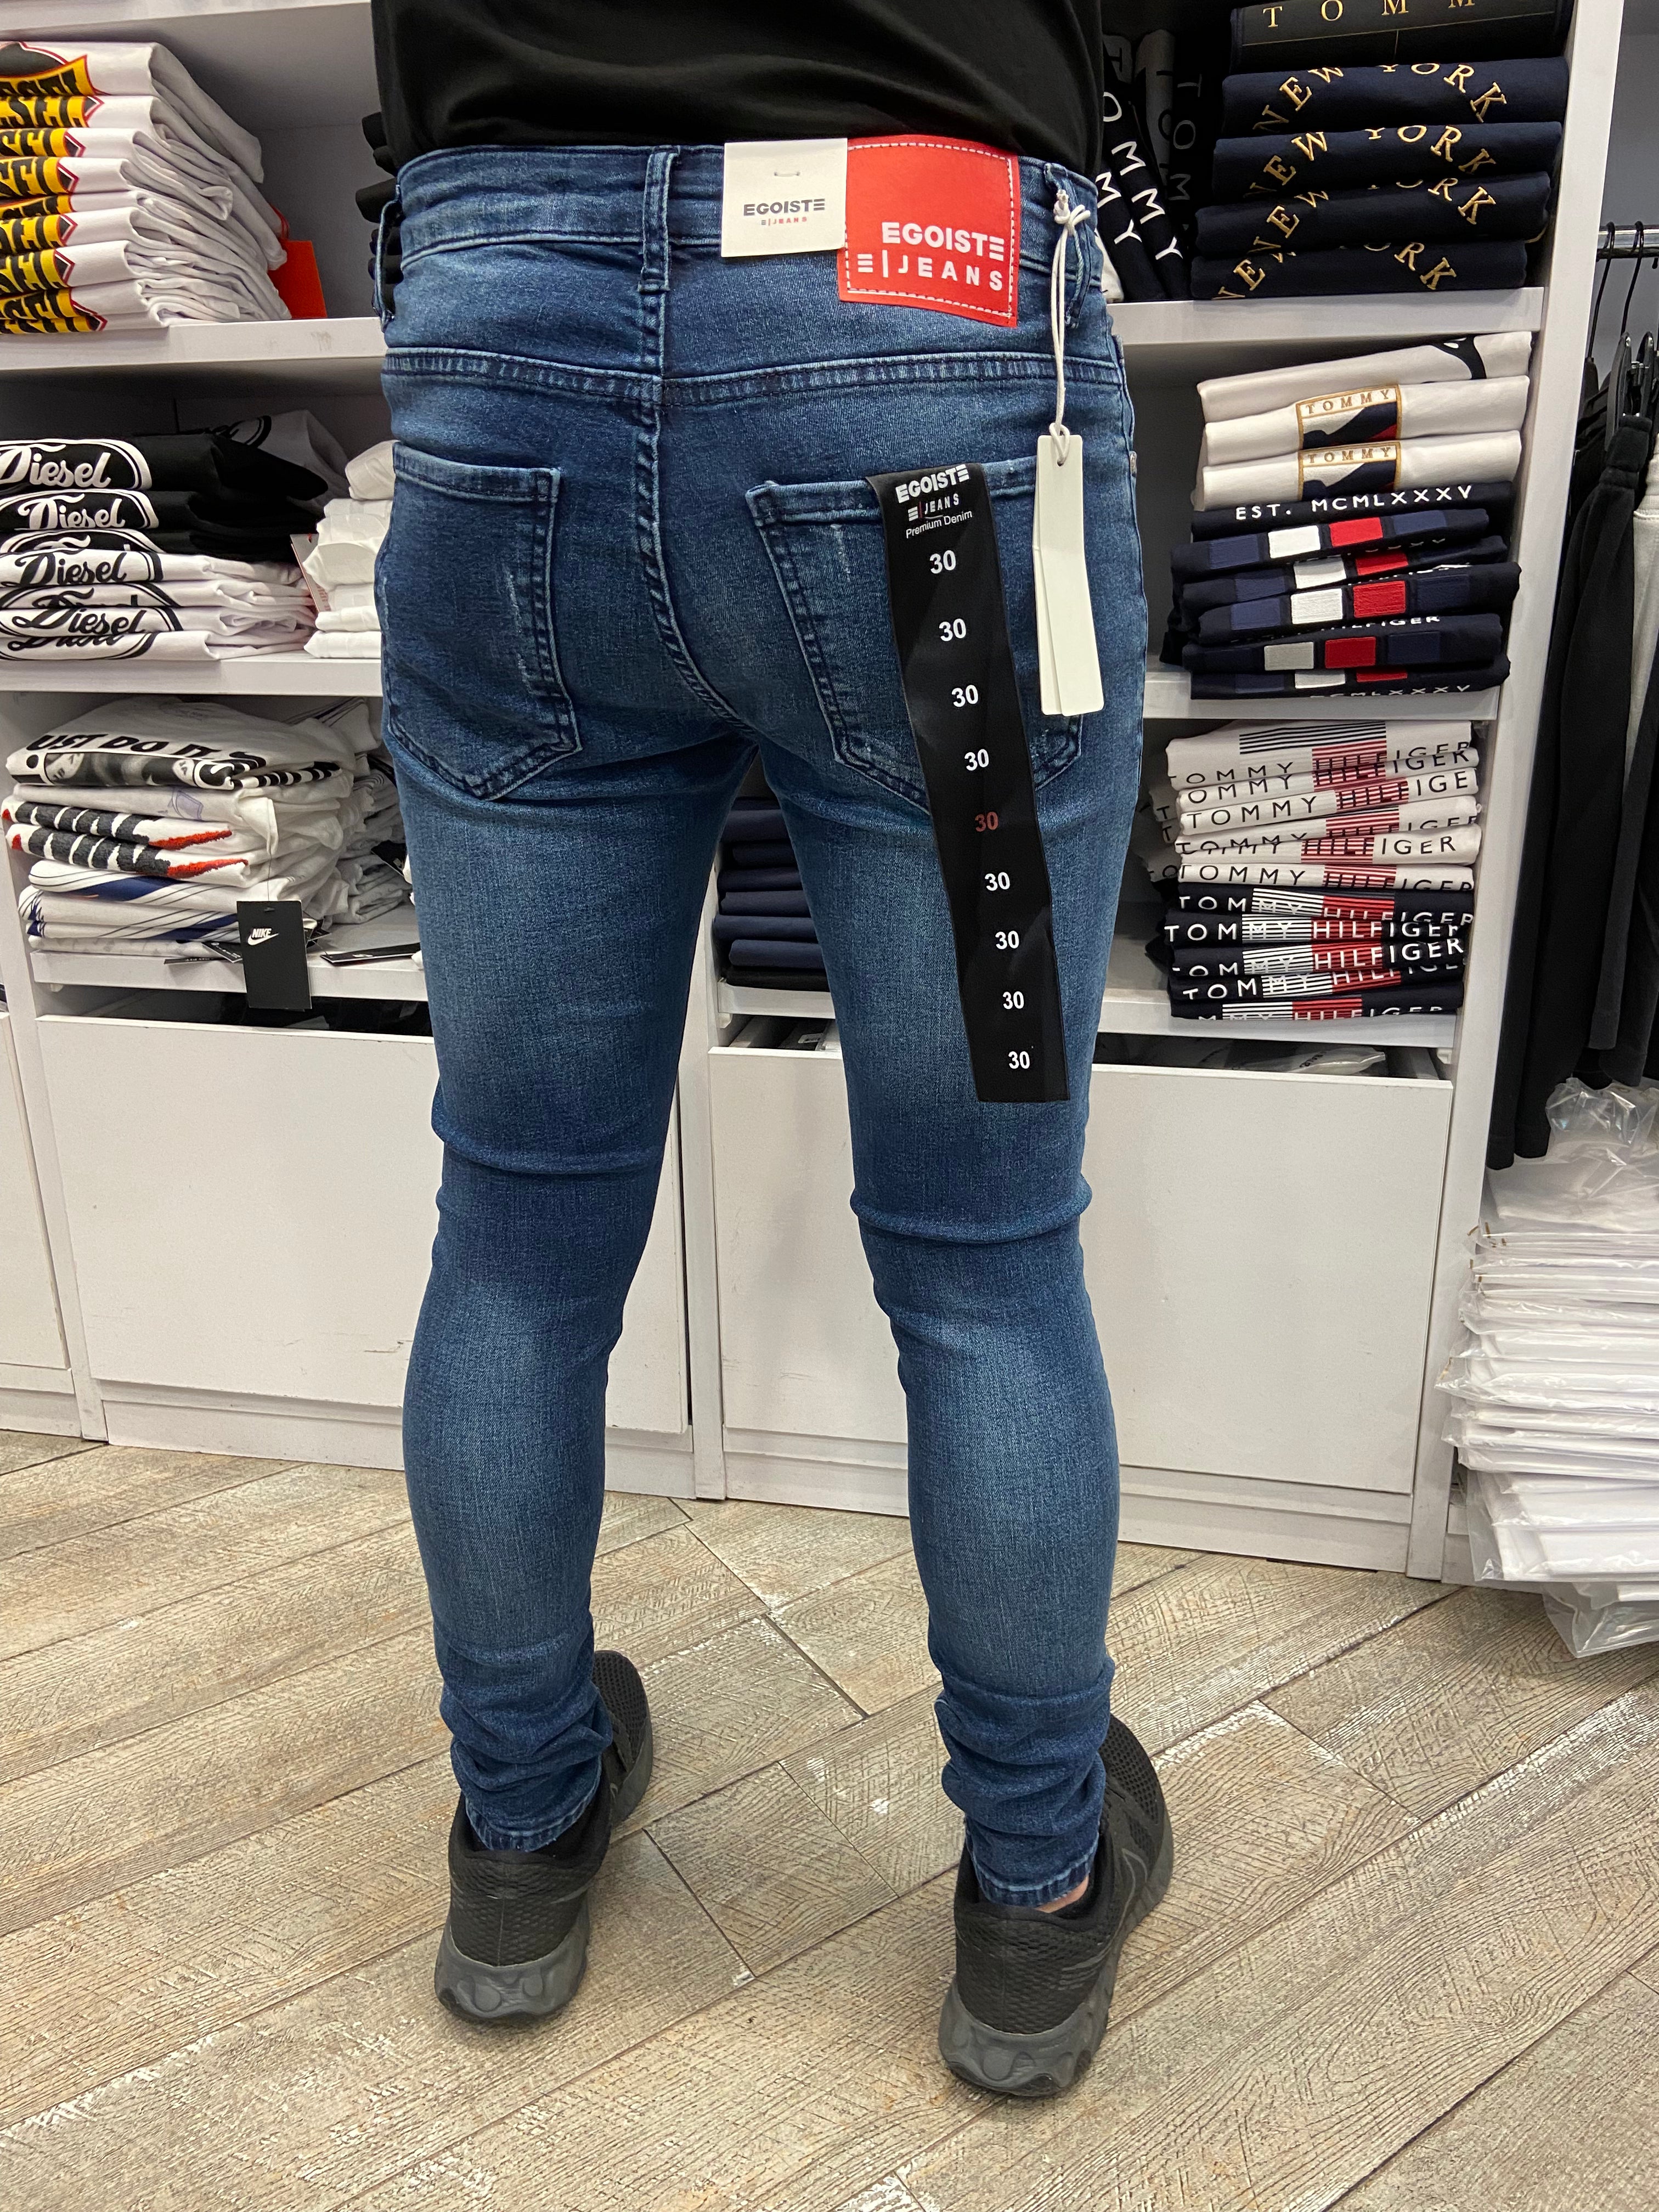 EGOIST Jeans Super Skini אגואיסט גינס סופר סקיני - M&A